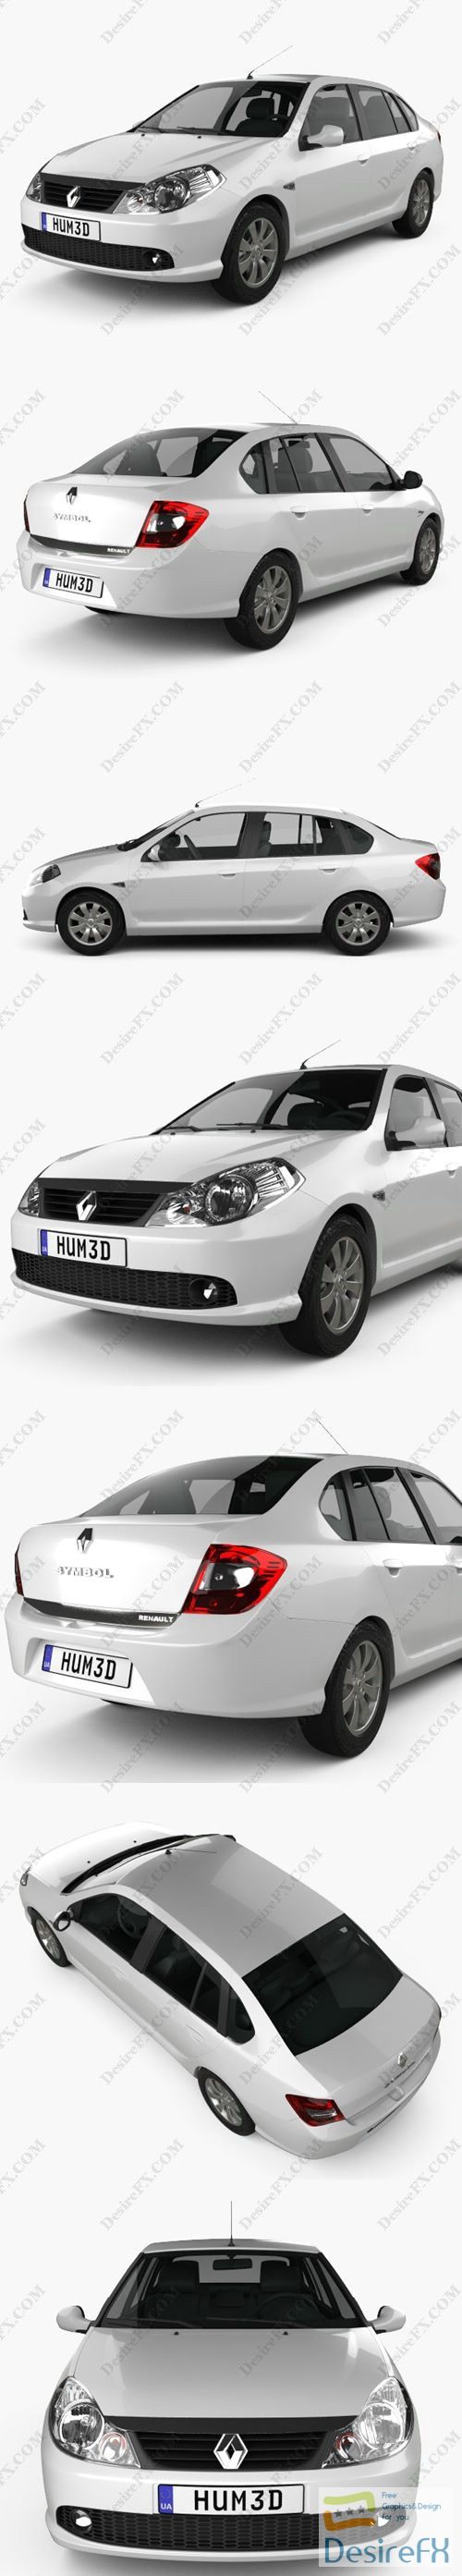 Renault Symbol 2010 3D Model